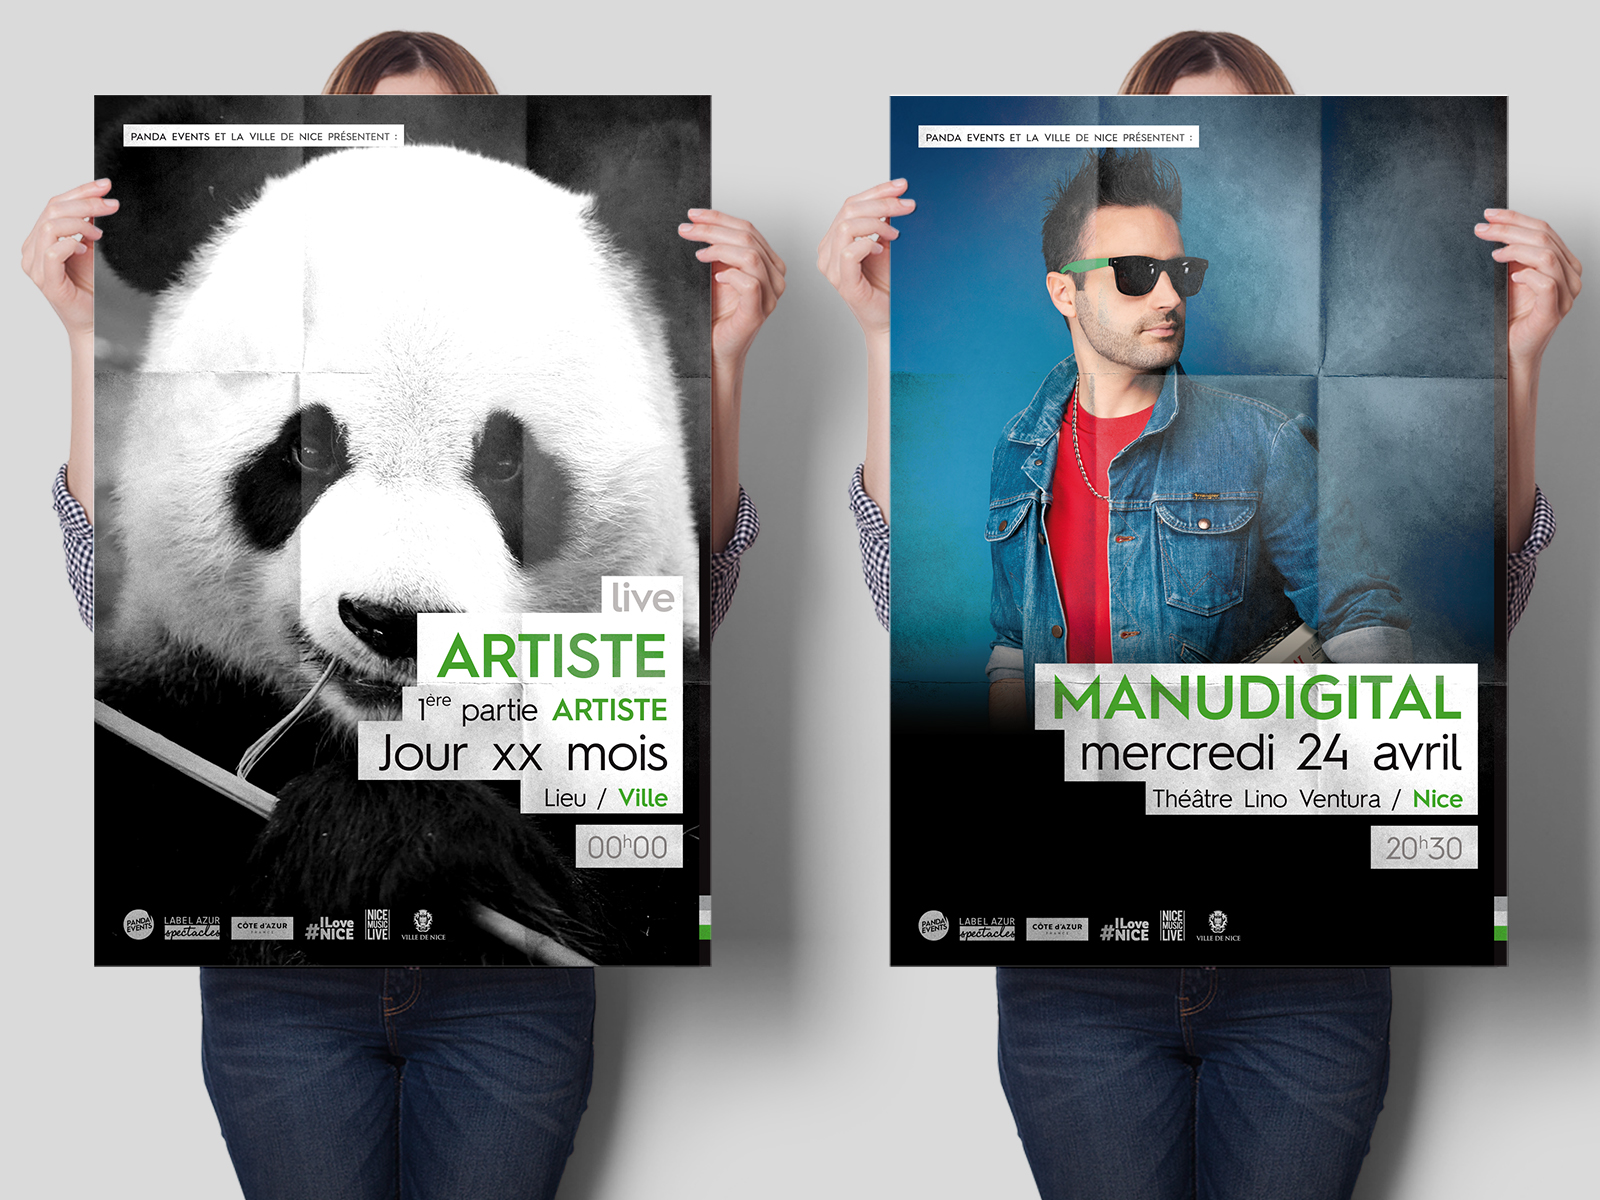 Panda Events